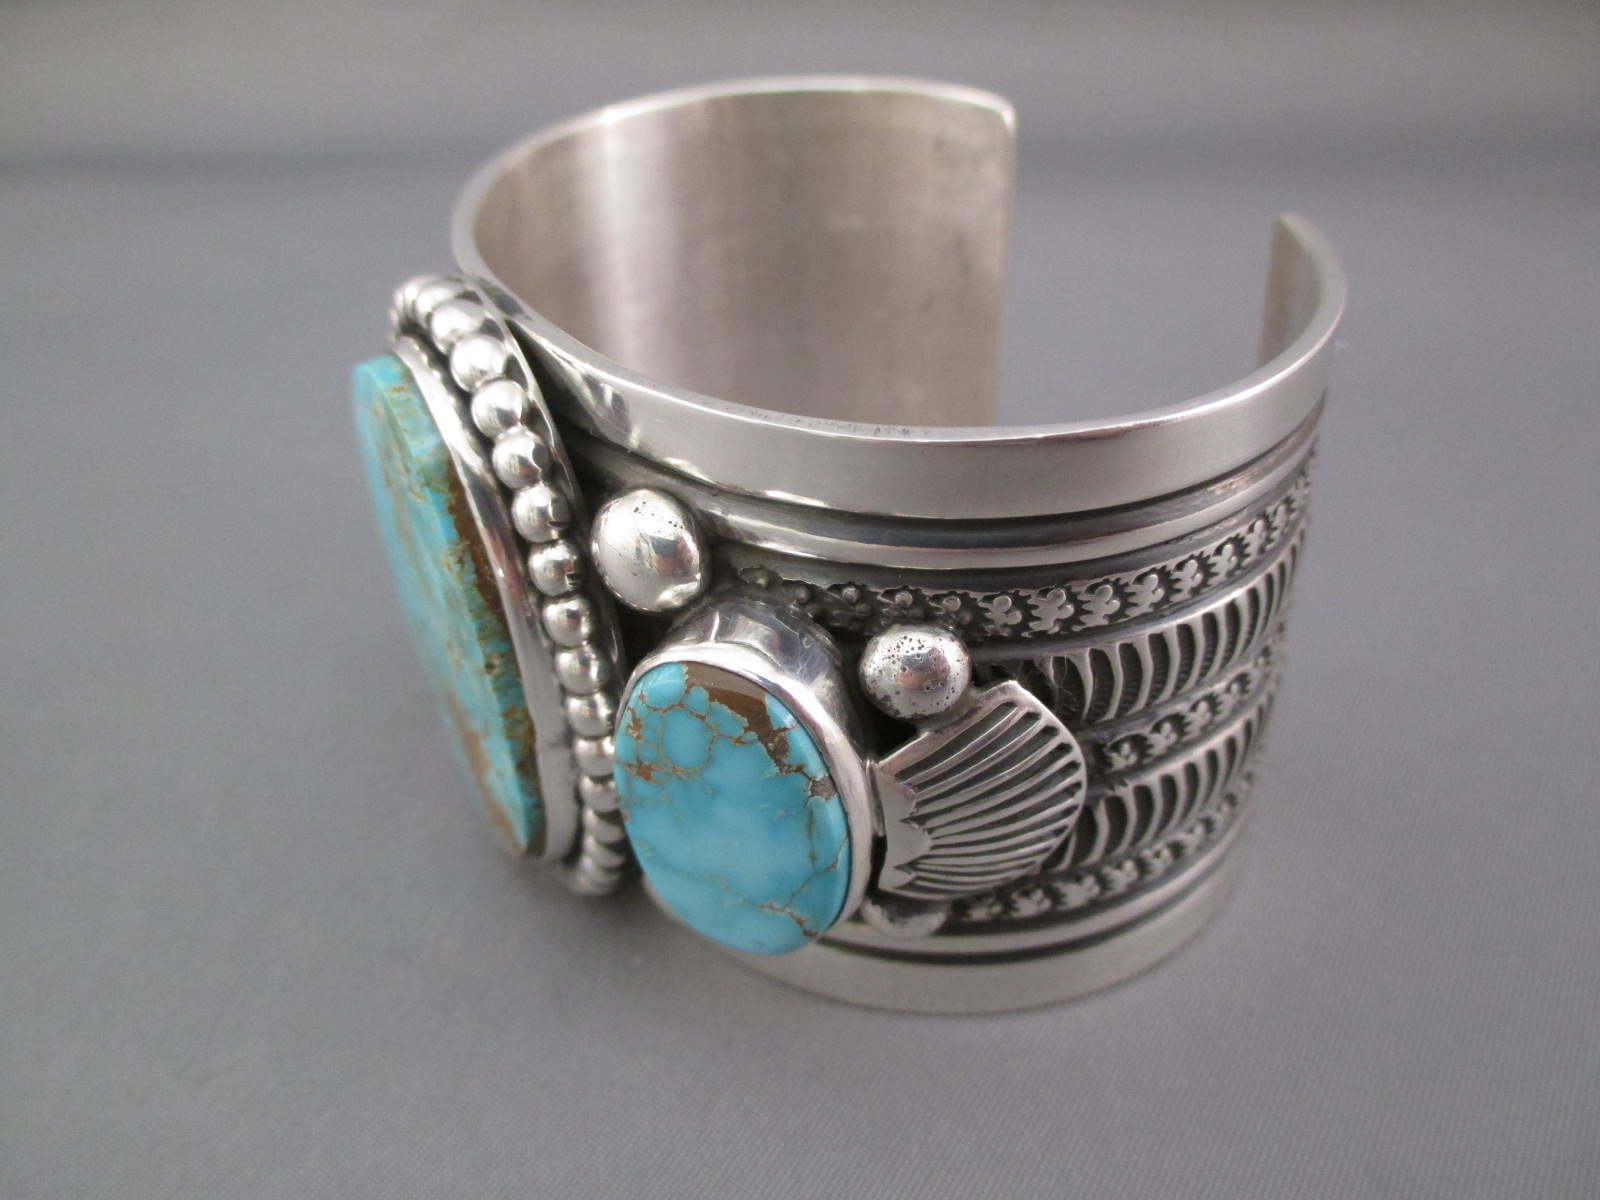 IMPRESSIVE Royston Turquoise Cuff Bracelet - Turquoise Jewelry